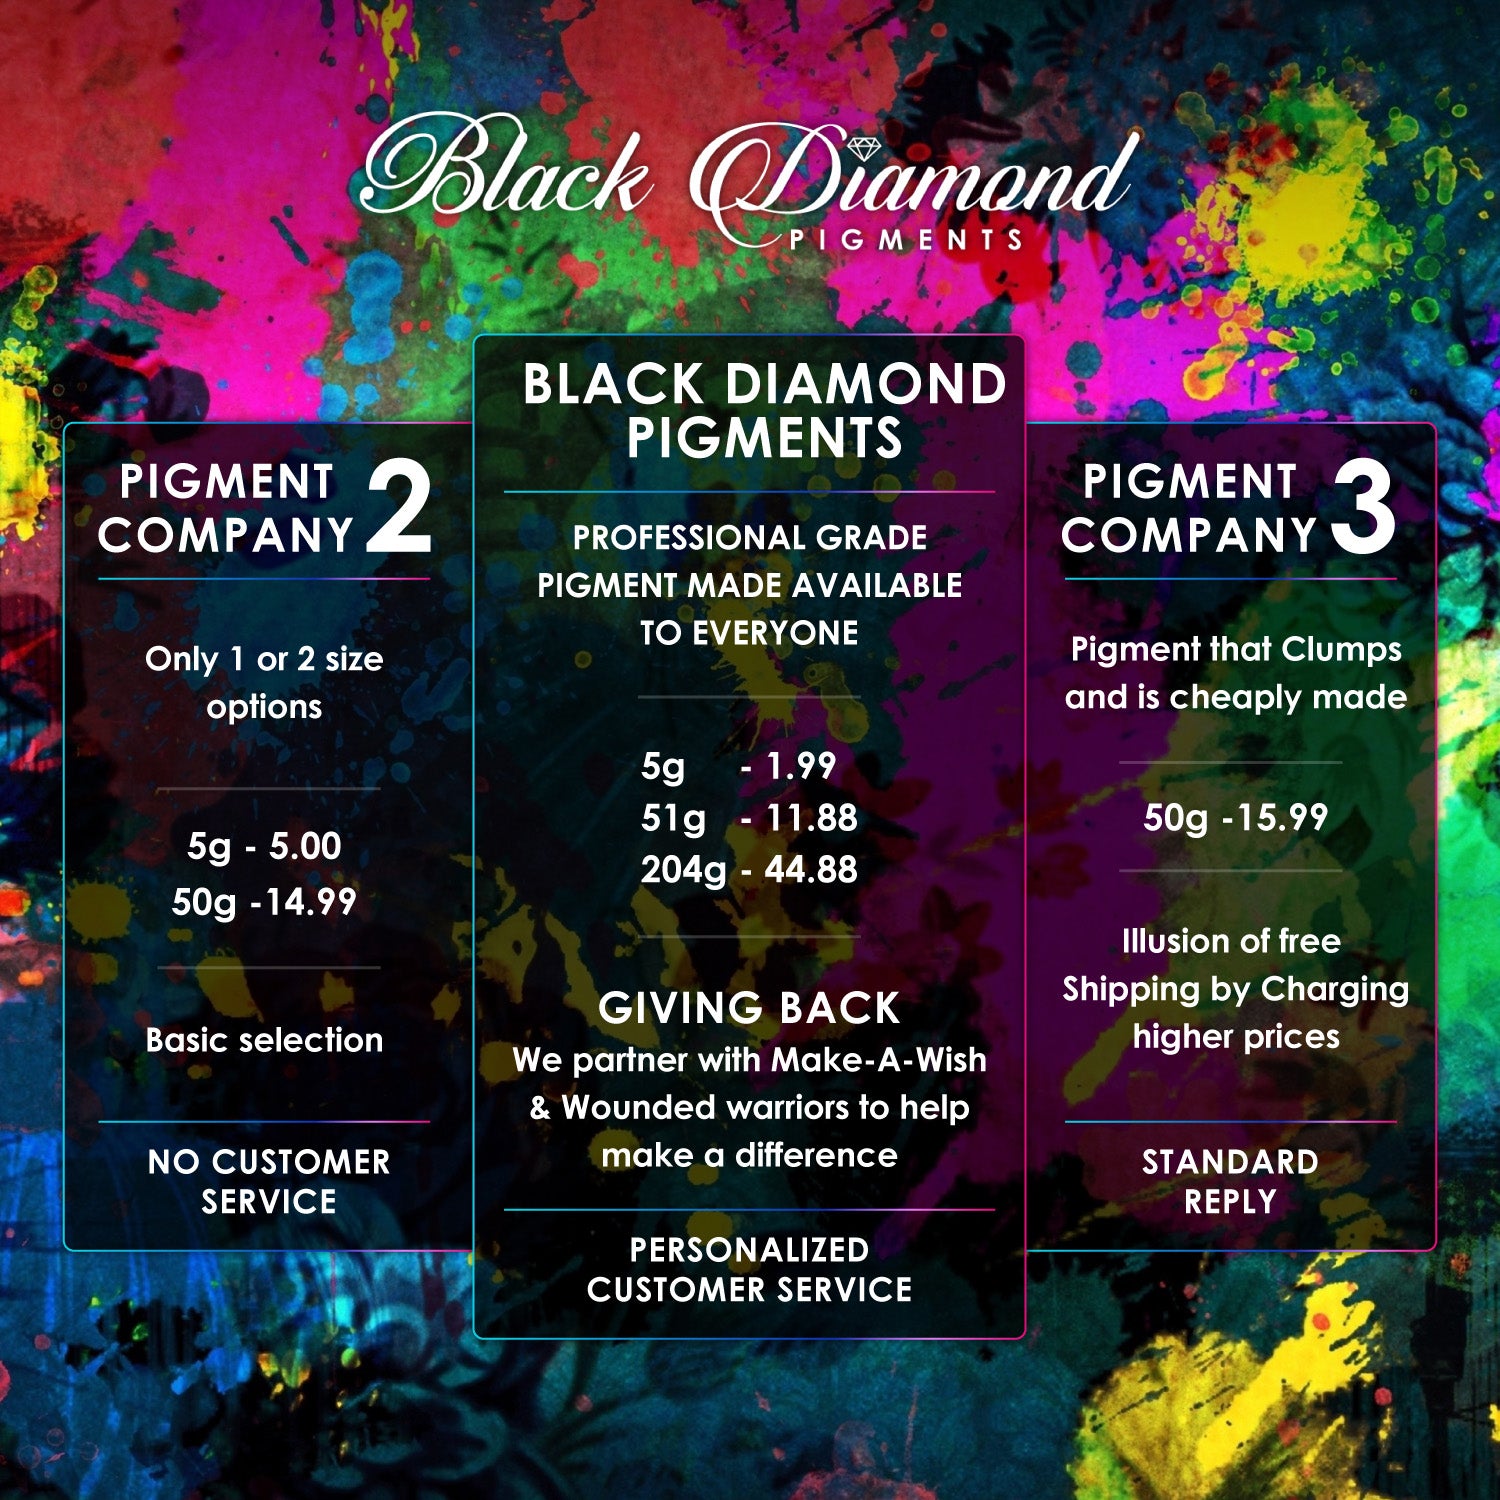 "MOONLIGHT ODYSSEY" Black Diamond Pigments